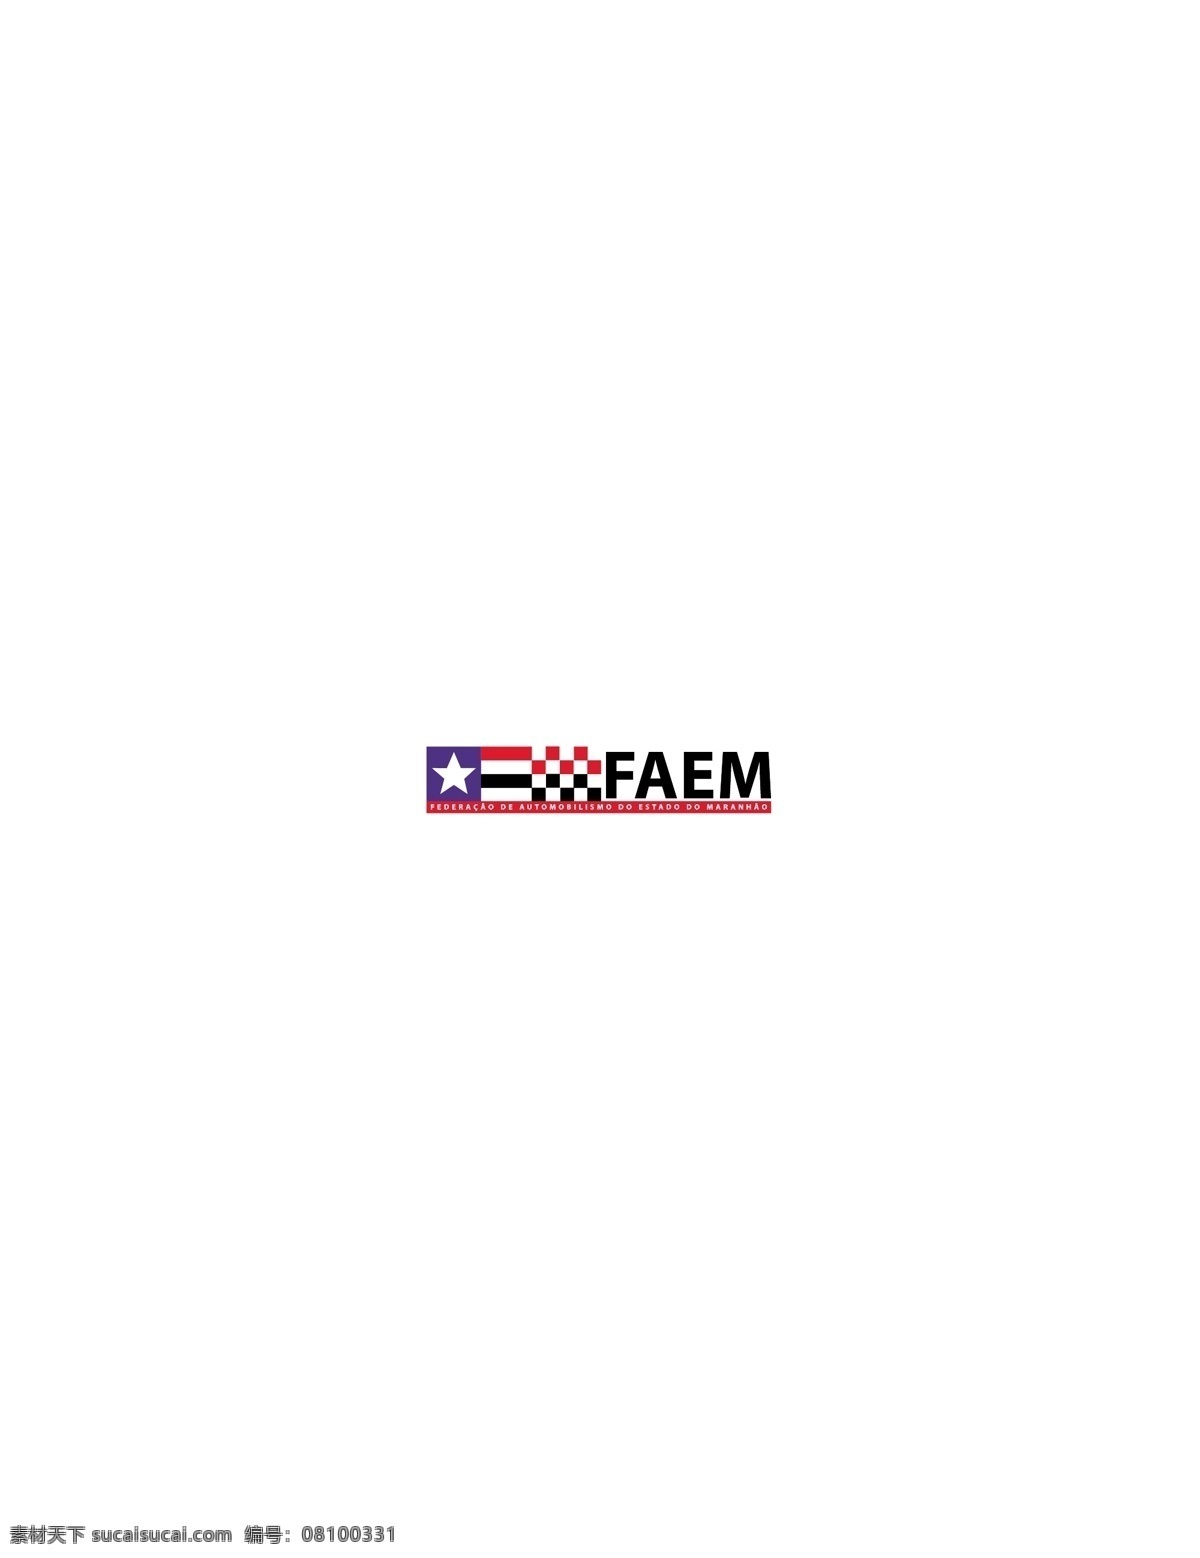 faem logo大全 logo 设计欣赏 商业矢量 矢量下载 矢量 汽车 标志 标志设计 欣赏 网页矢量 矢量图 其他矢量图